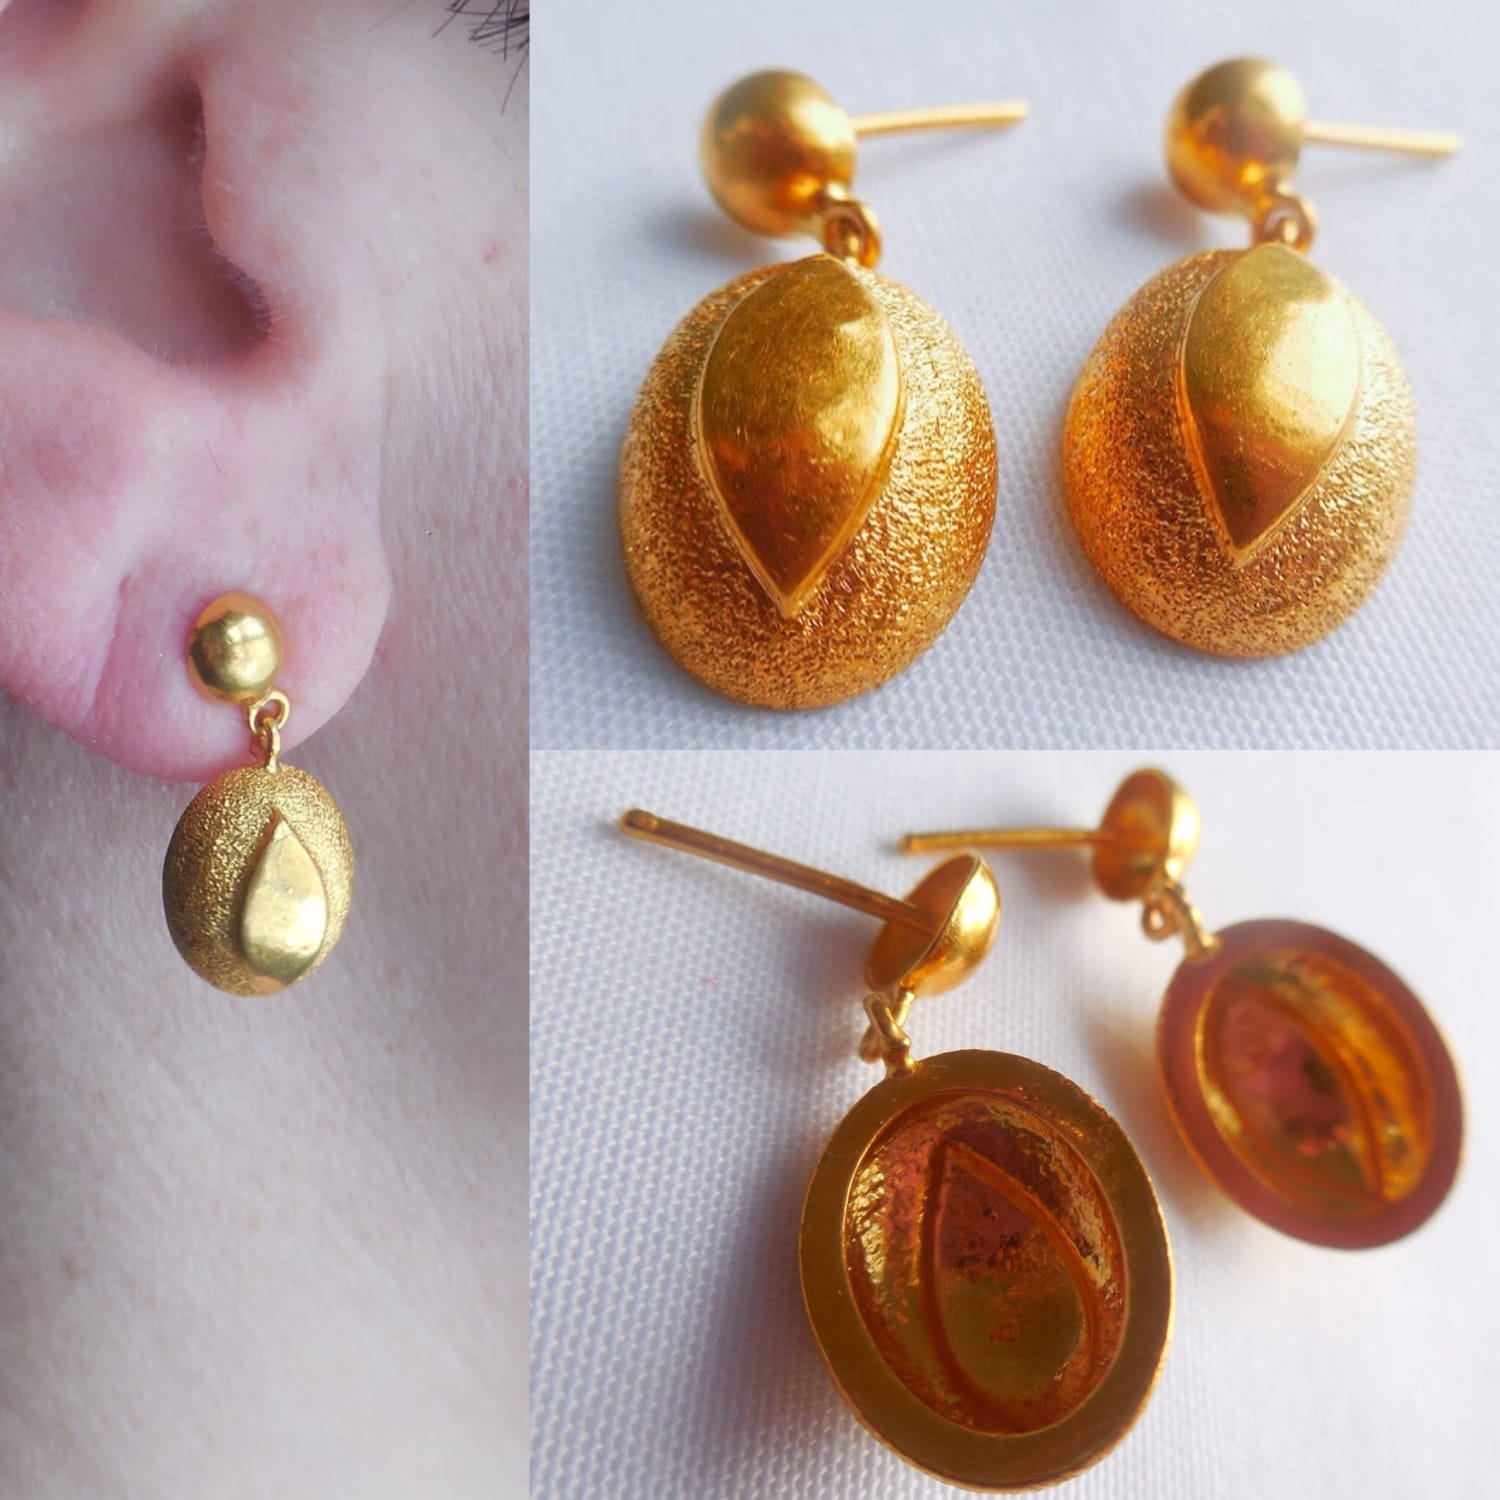 SALE Solid 24k Handmade Gold Dangle Laos Earrings Gold